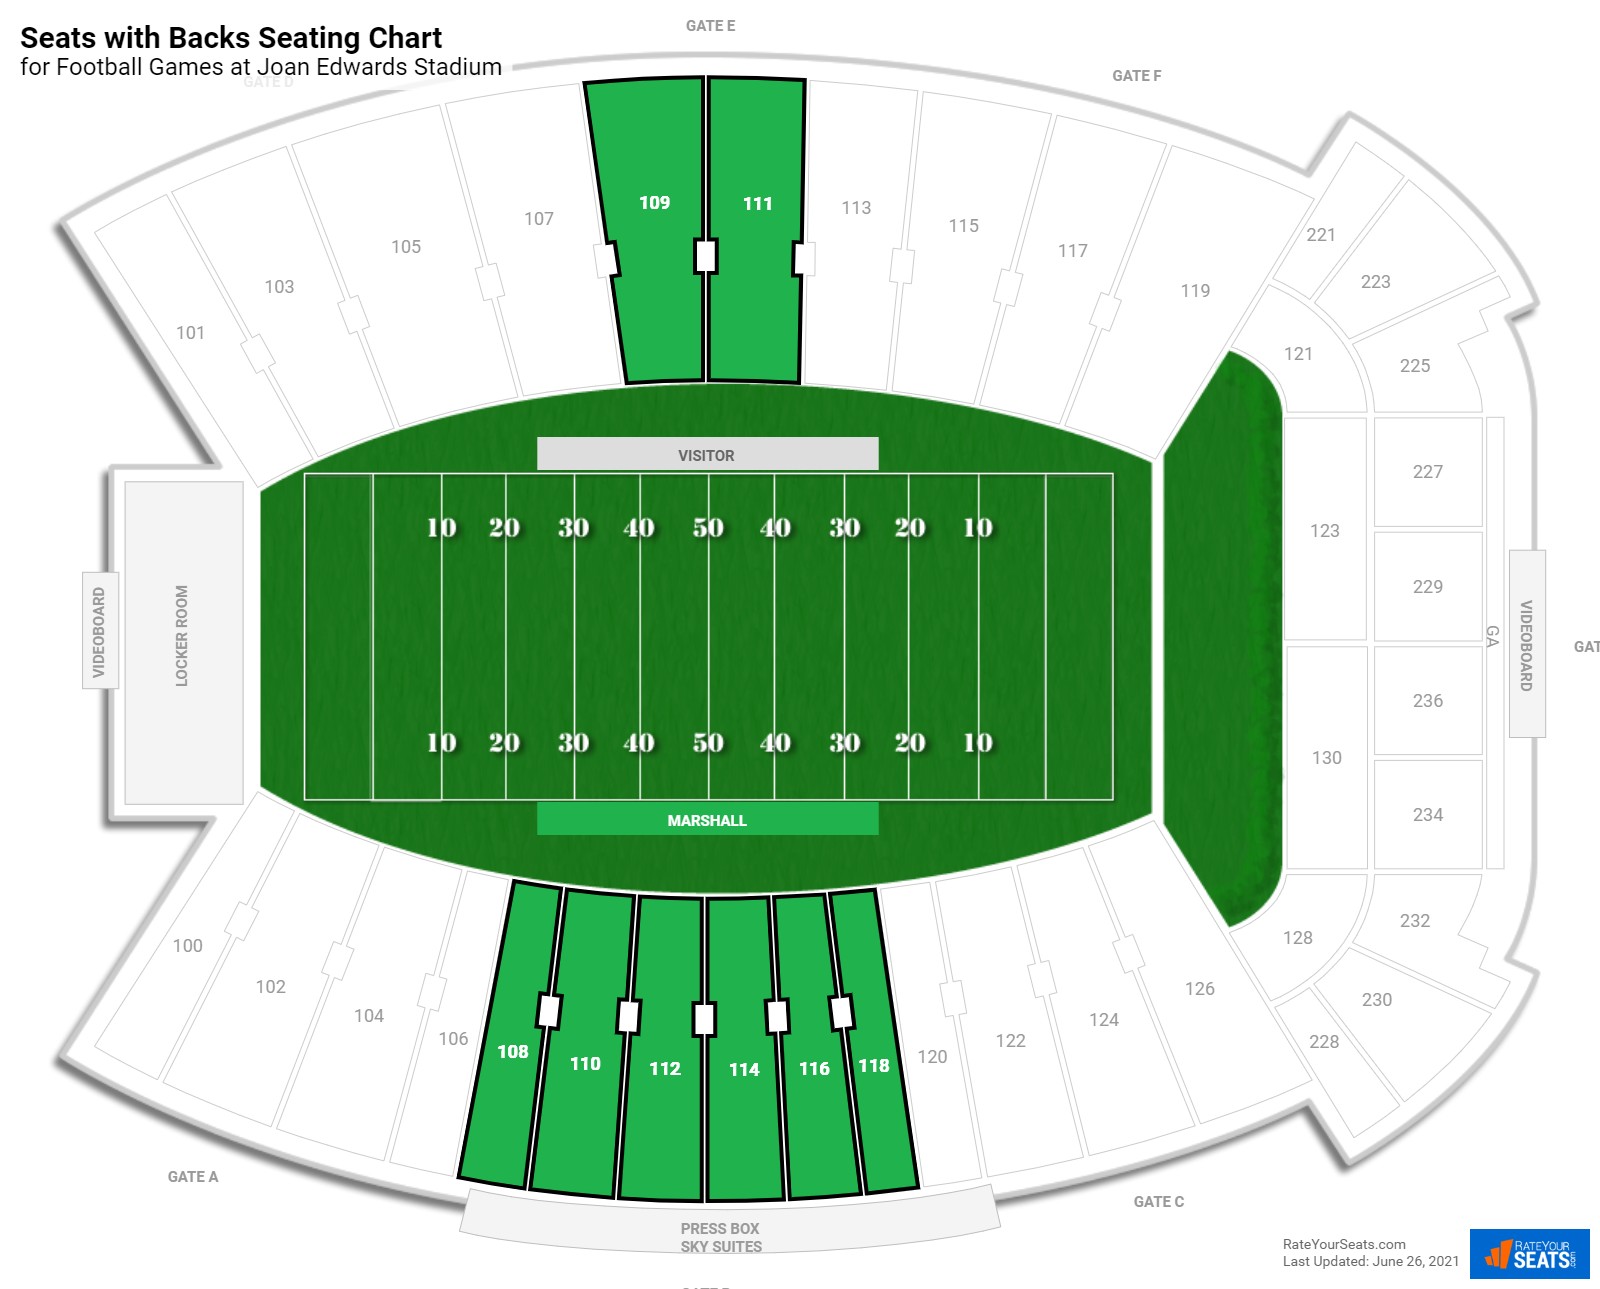 Football Seats with Backs Seating Chart at Joan Edwards Stadium